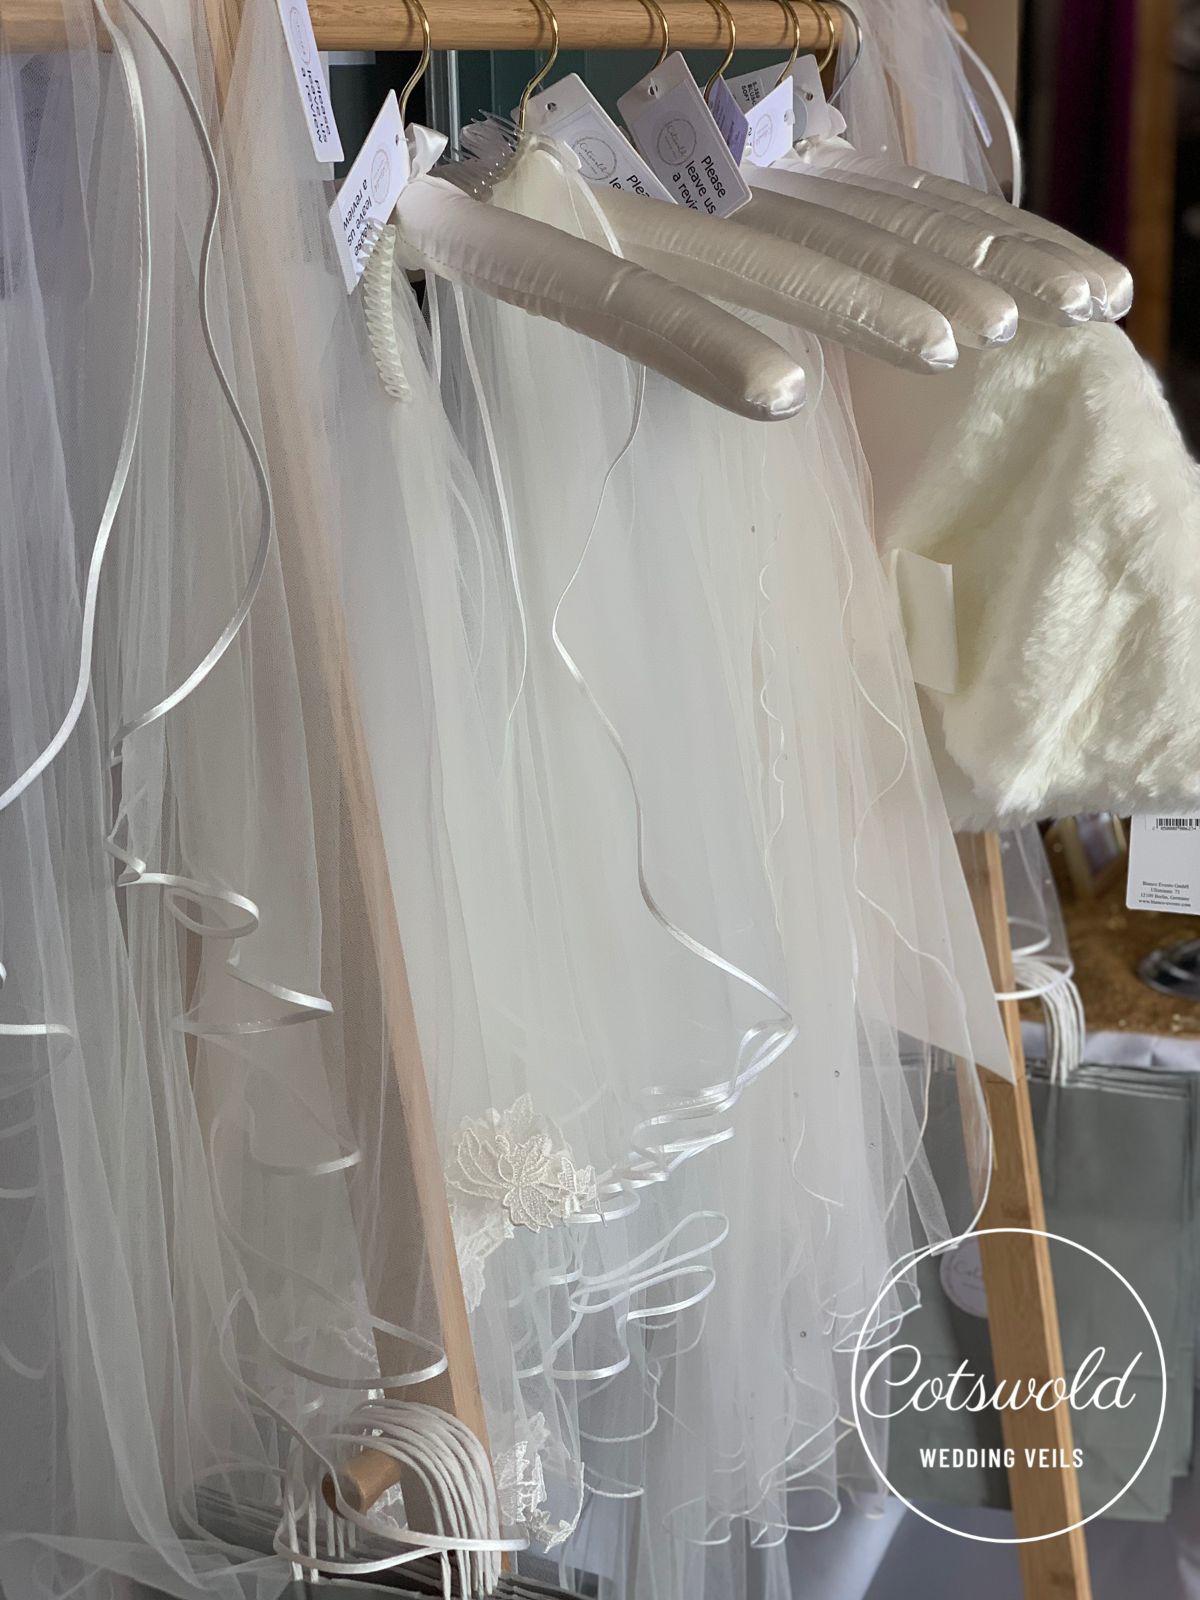 Cotswold Bridal Accessories Ltd-Image-10